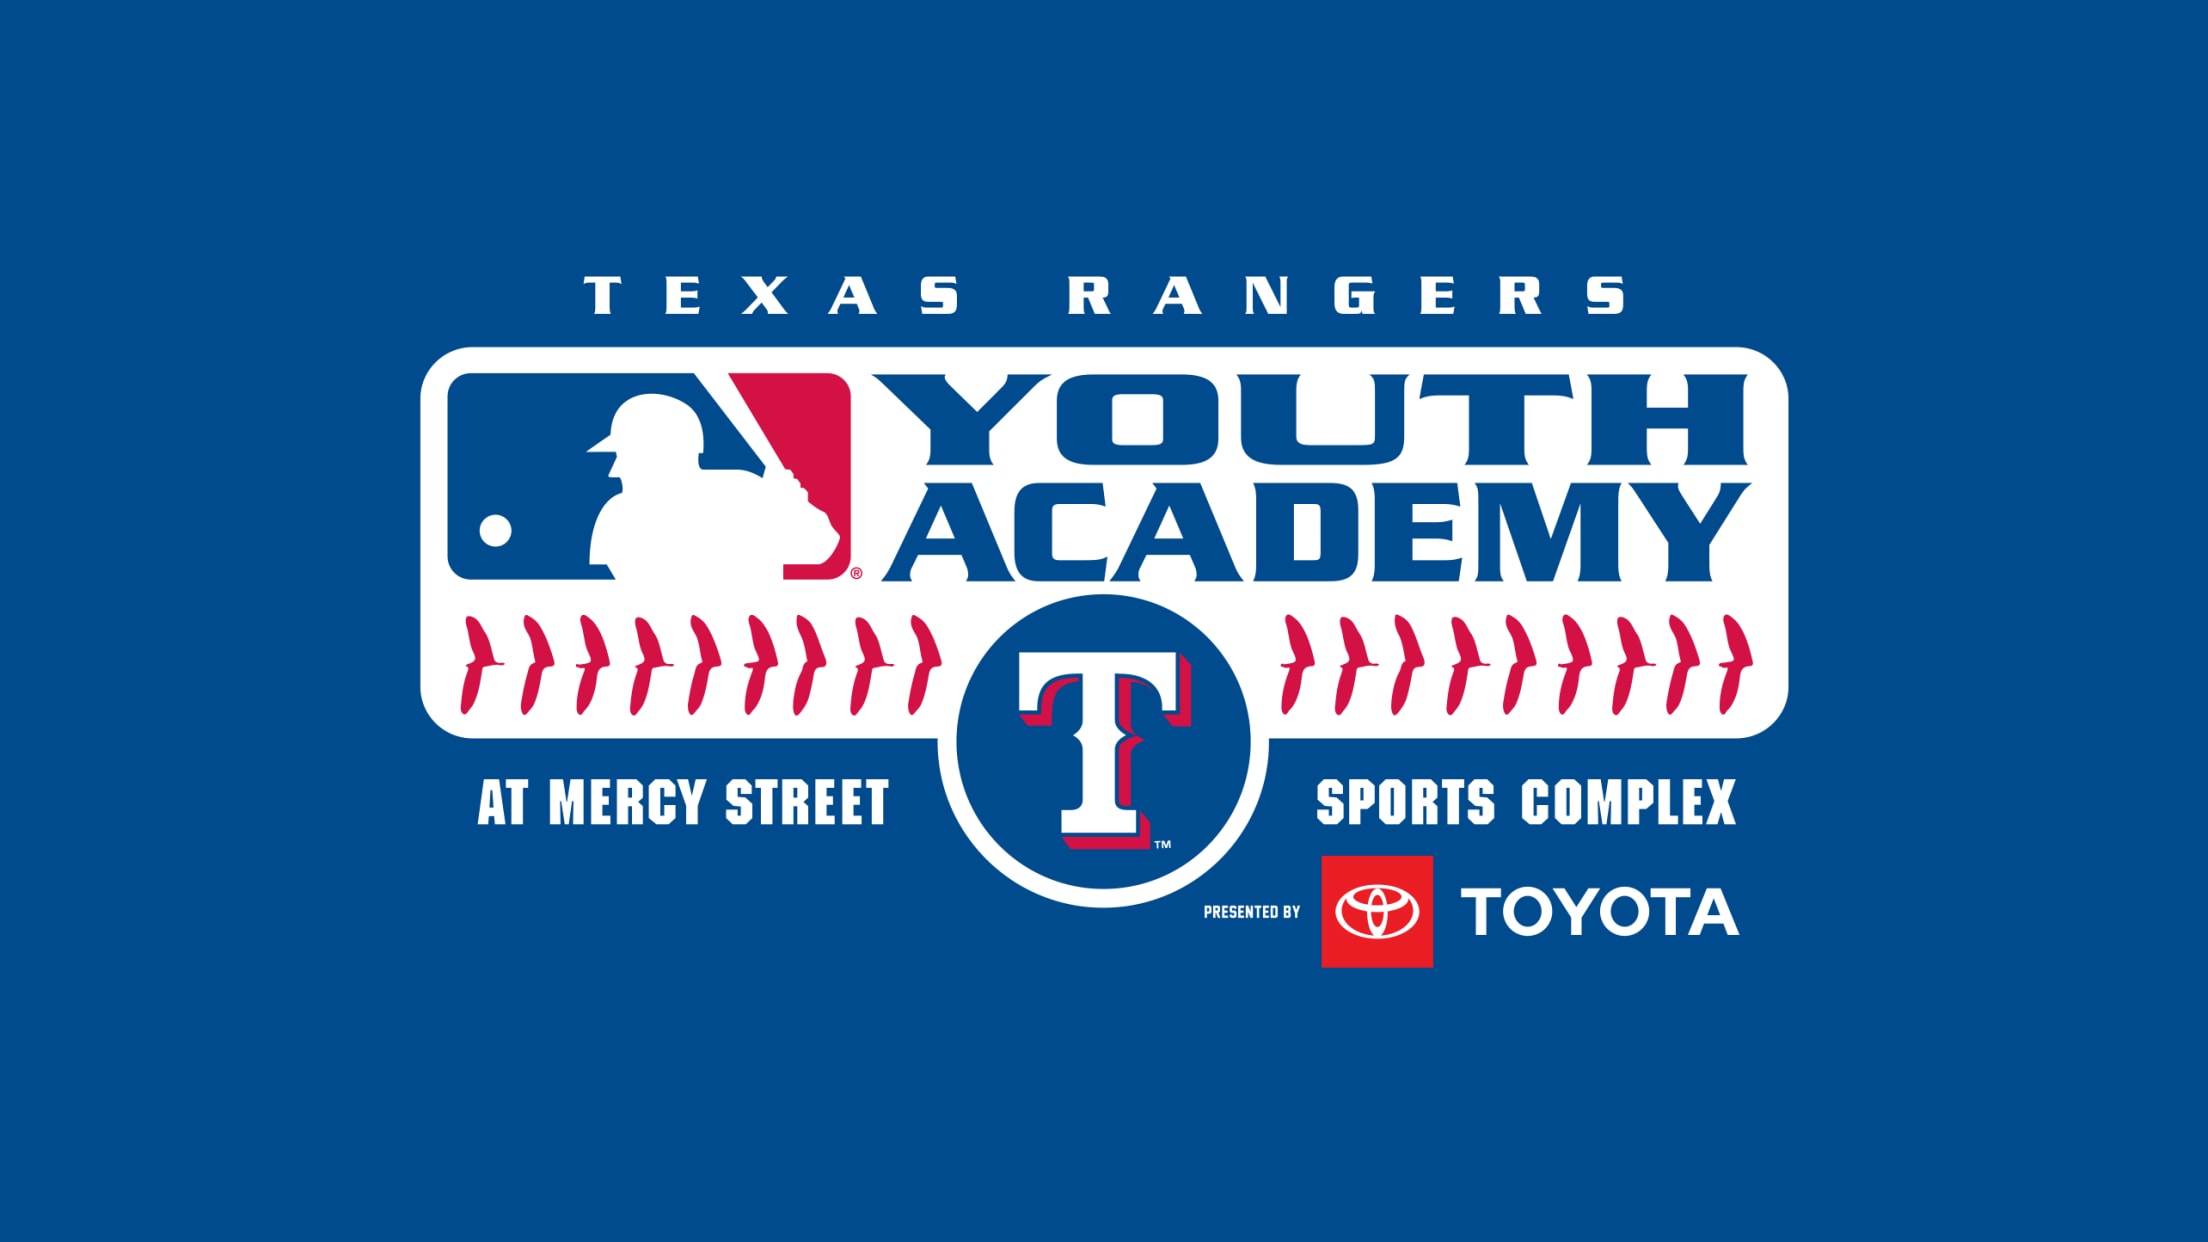 Lone Star Ball, a Texas Rangers community